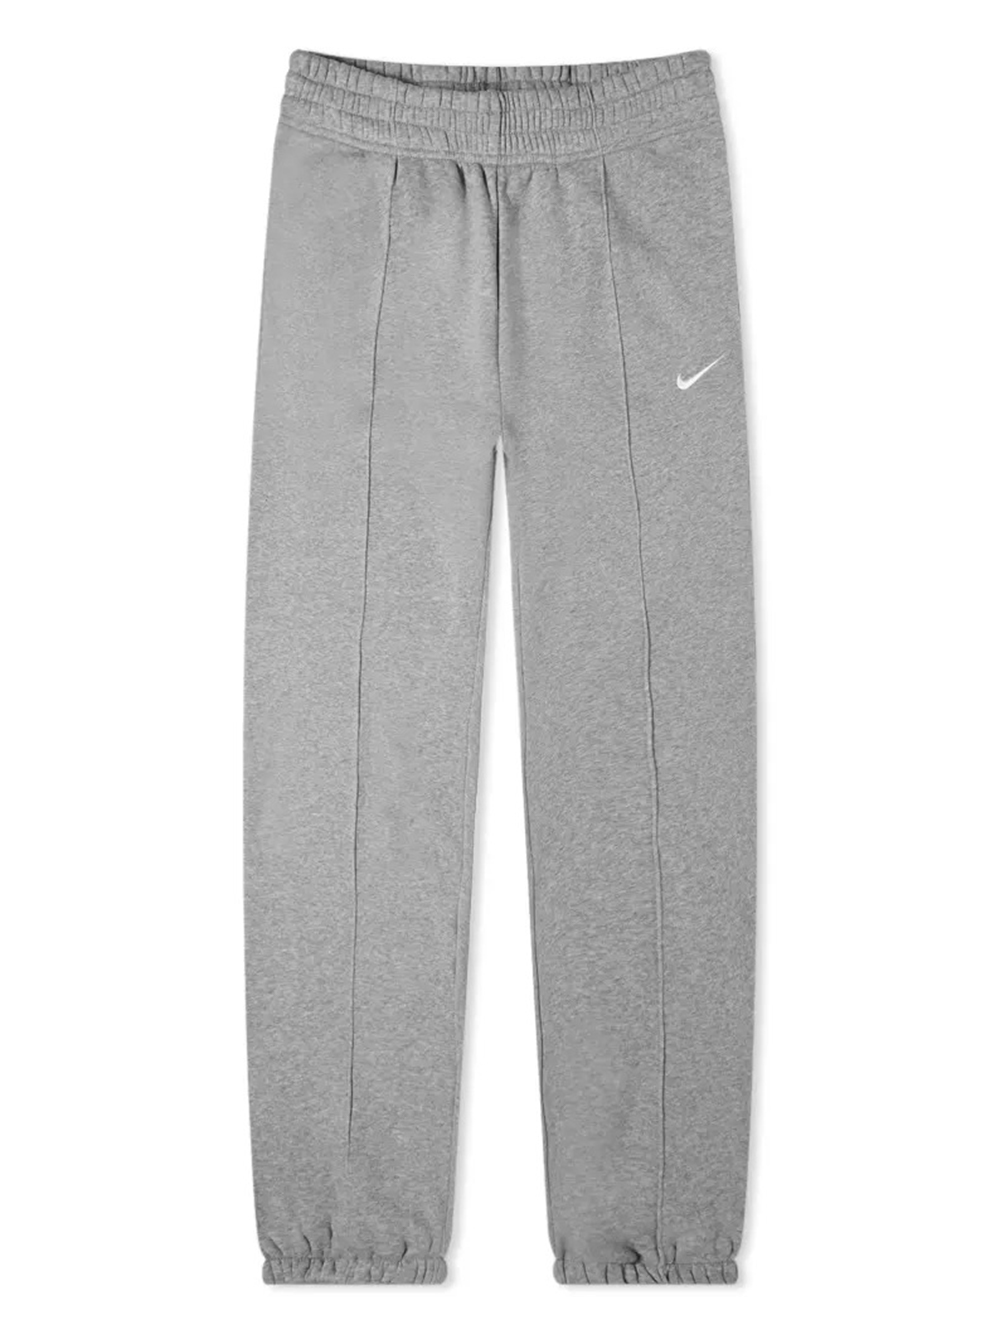 Nike Sportswear Essential Fleece Pants Mineral Clay/White | Stylerunner